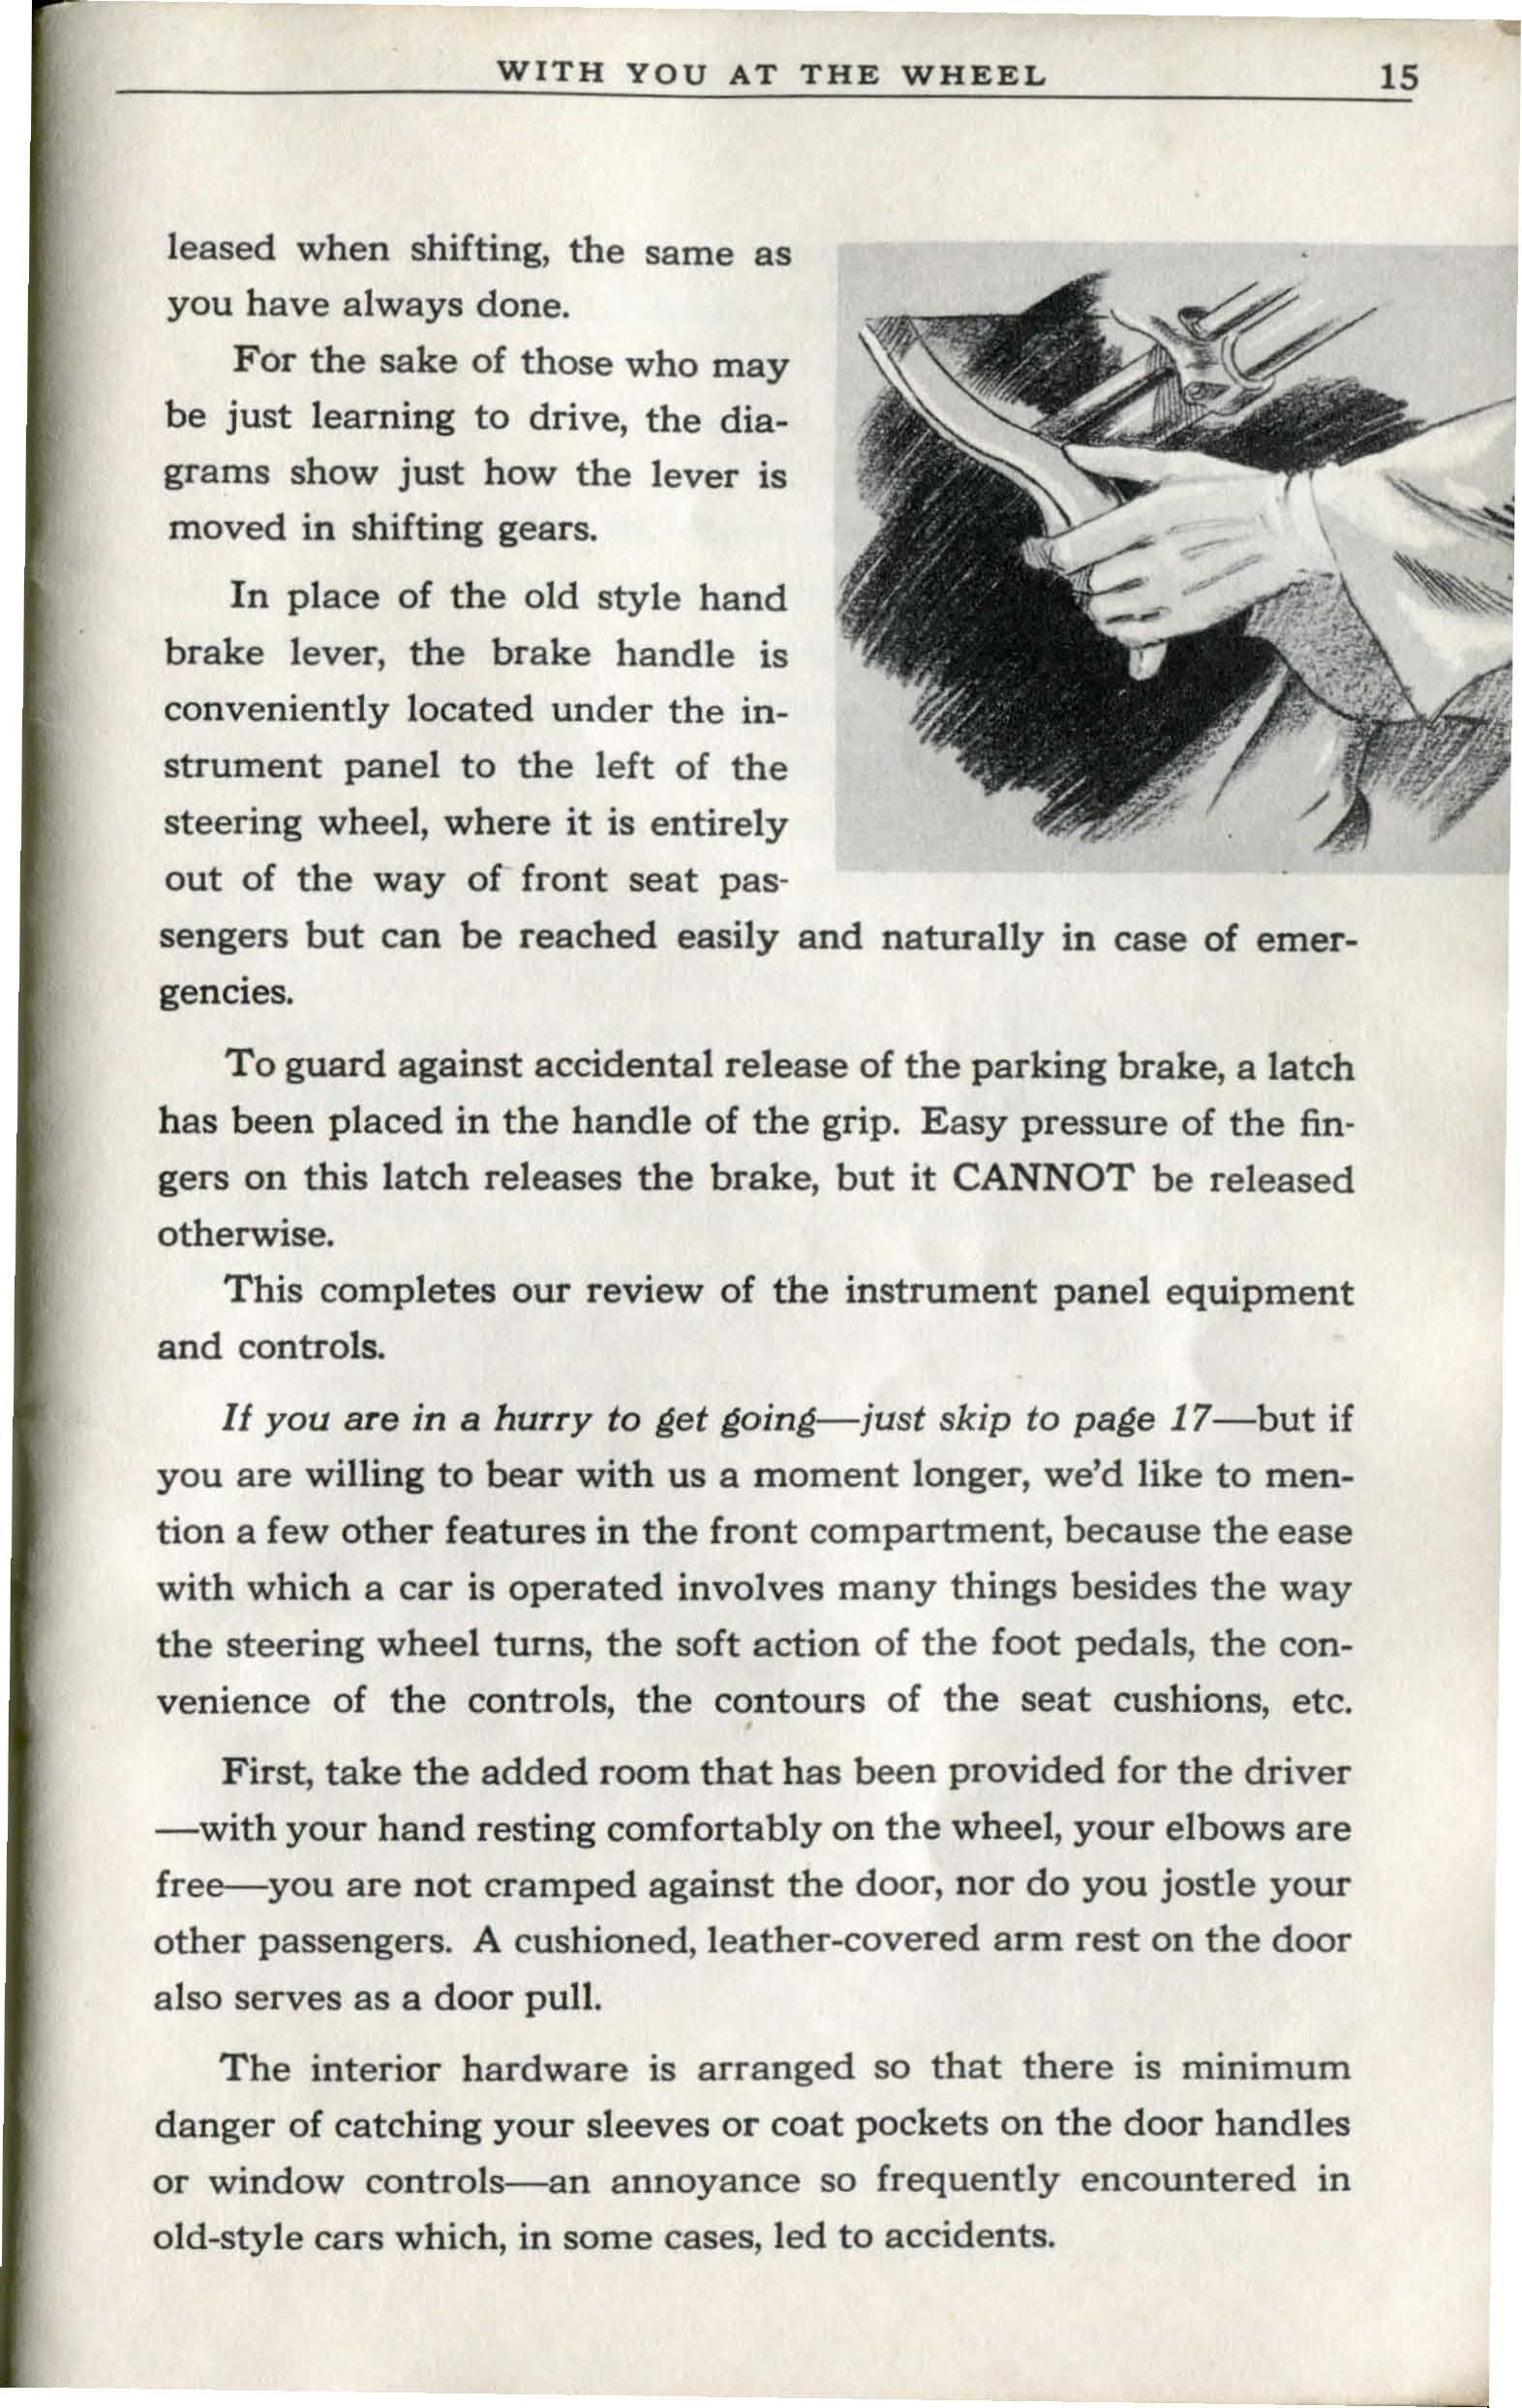 1940_Oldsmobile_Operating_Guide-17